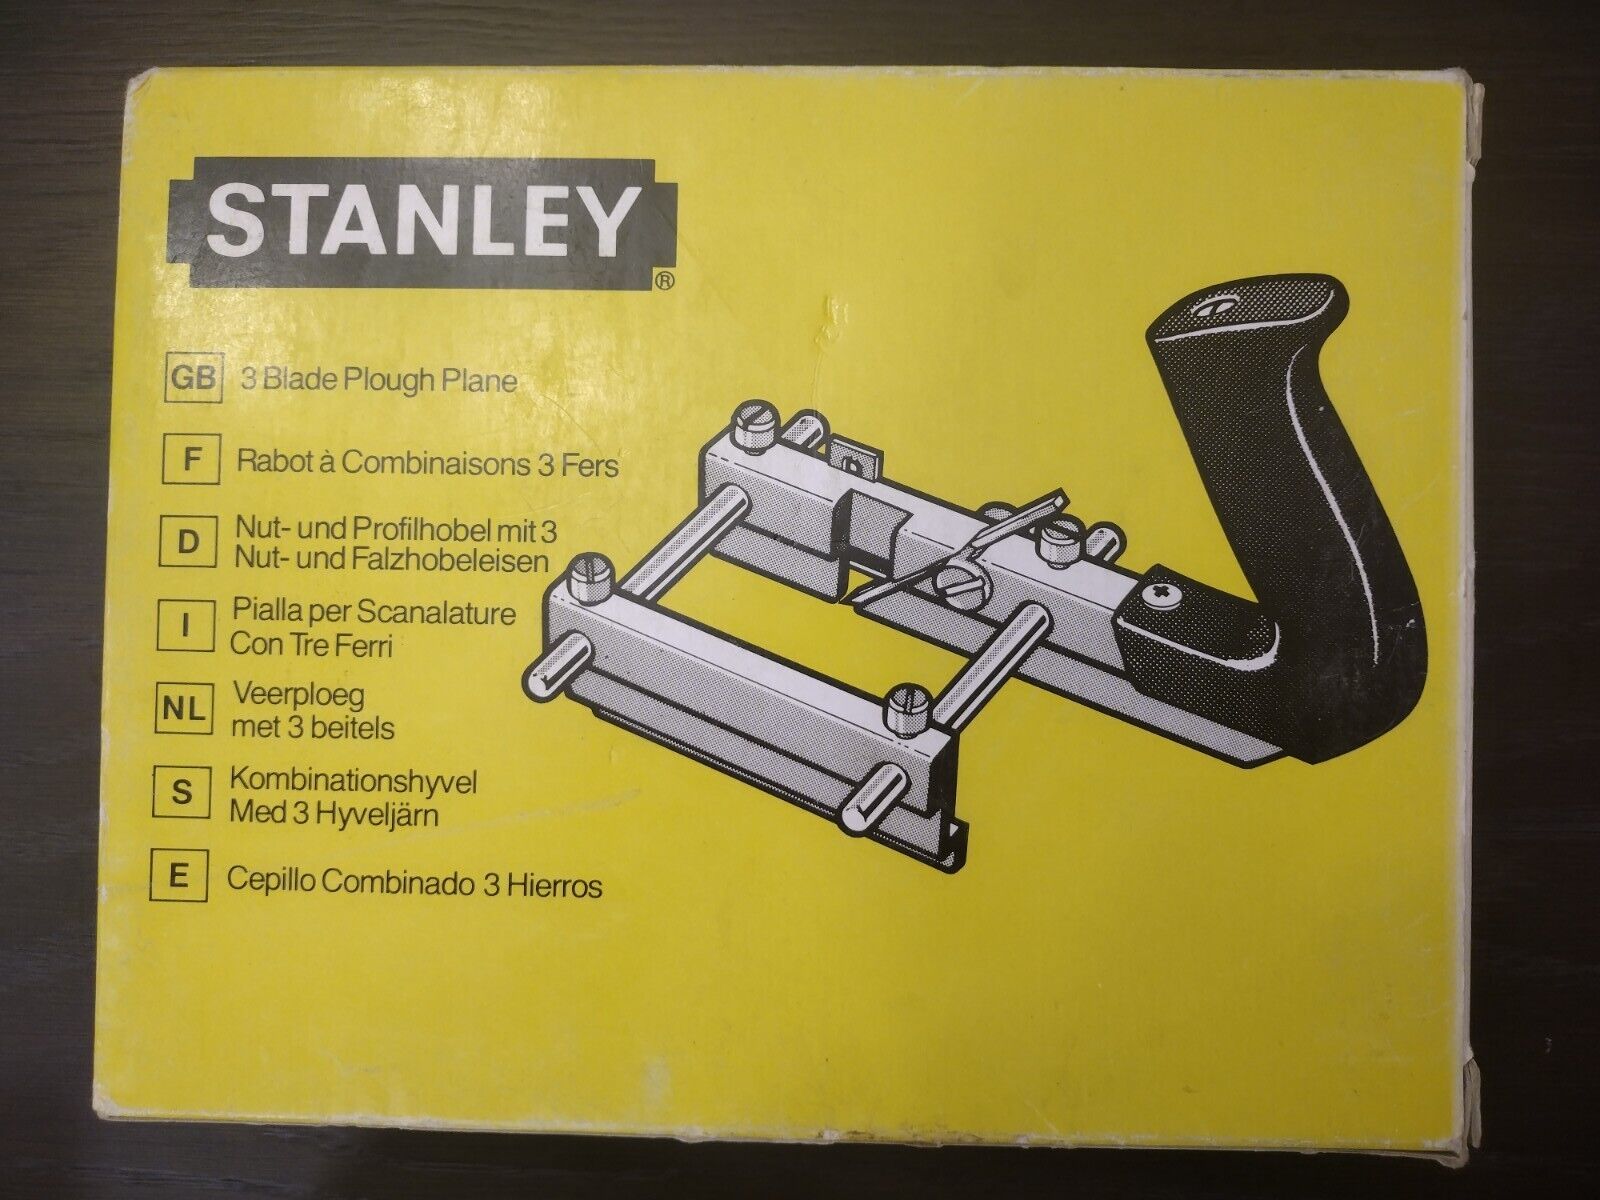 Stanley 12-0300 Combination Plough Plane in original box